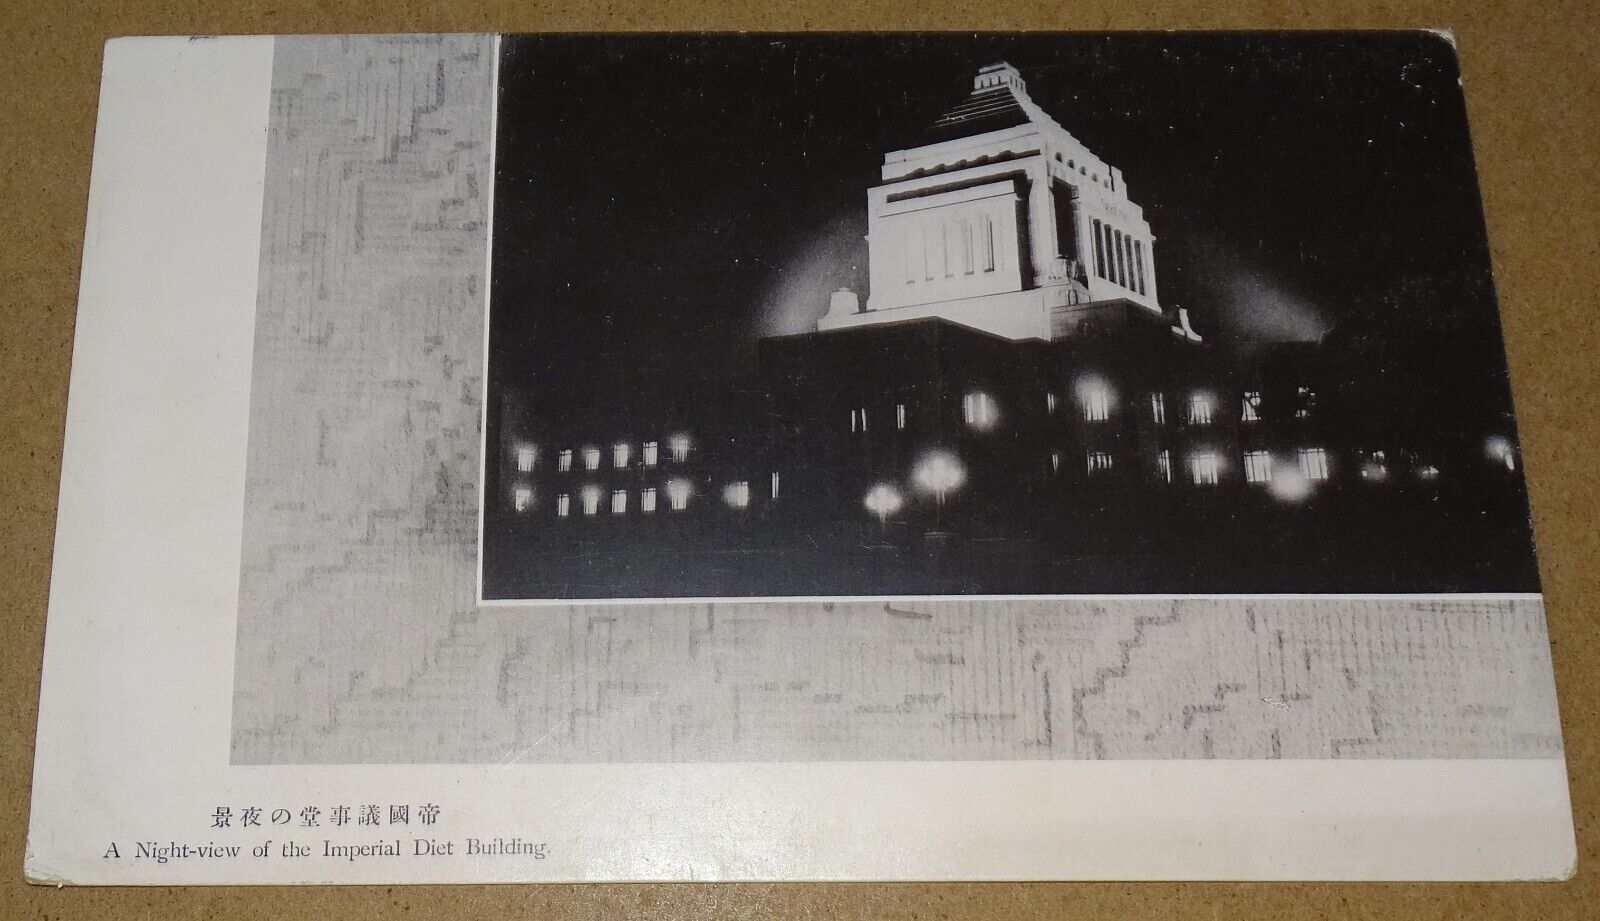 Oct 21 1945 Navy Postmark on Imperial Diet Building Postcard sent from Japan